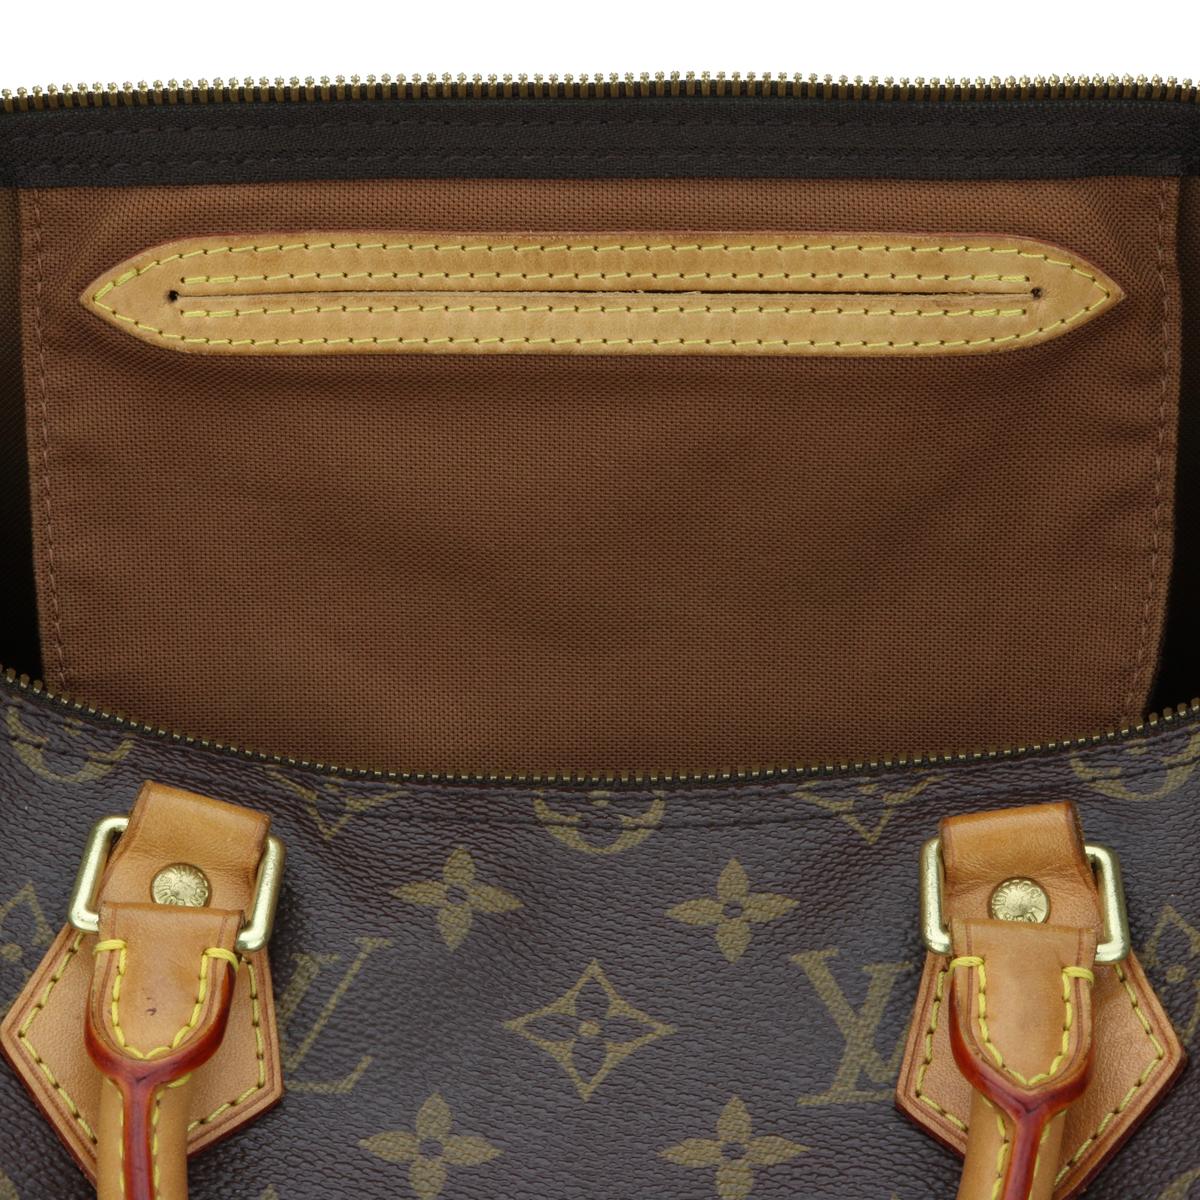 Louis Vuitton Speedy Bandoulière 35 Bag in Monogram 2011 14